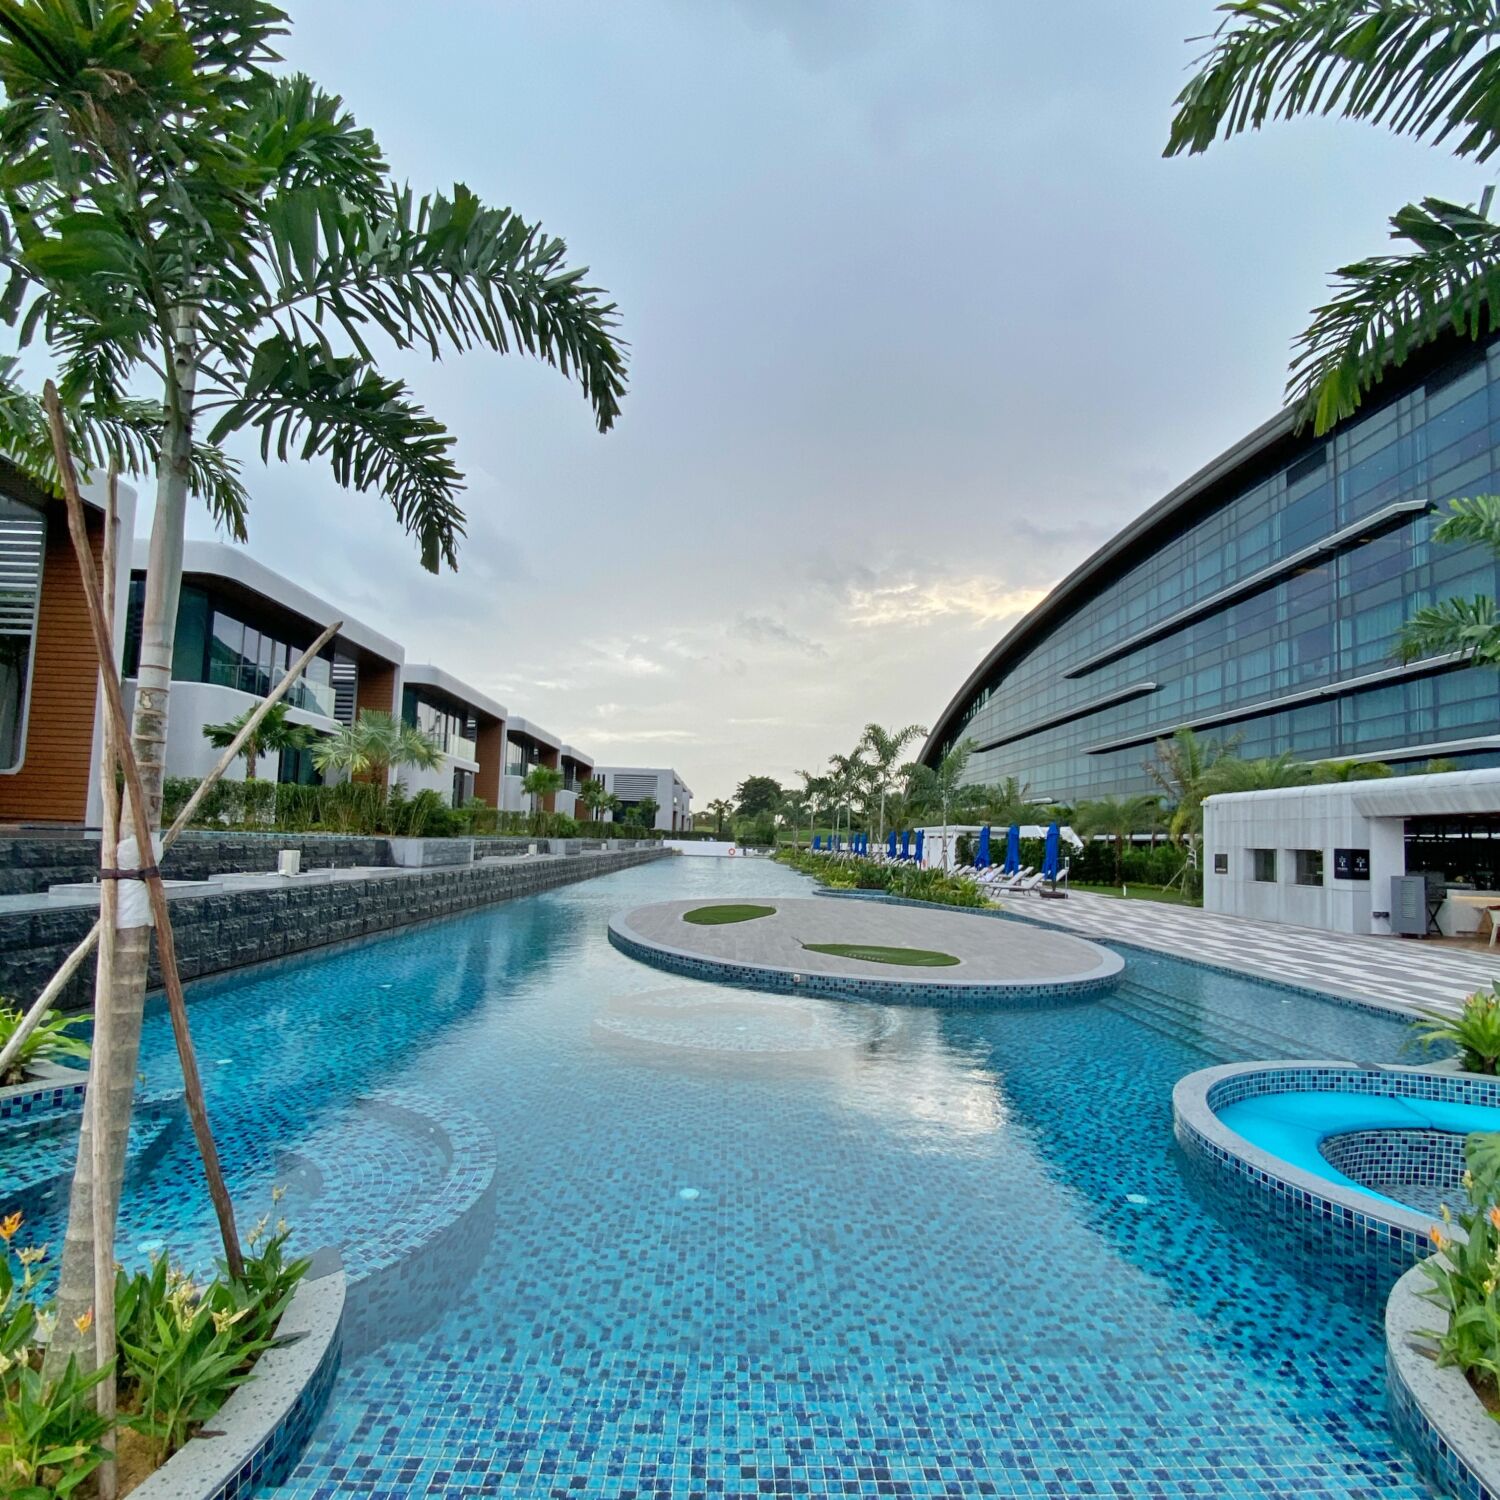 Dusit Thani Laguna Singapore Lap Pool